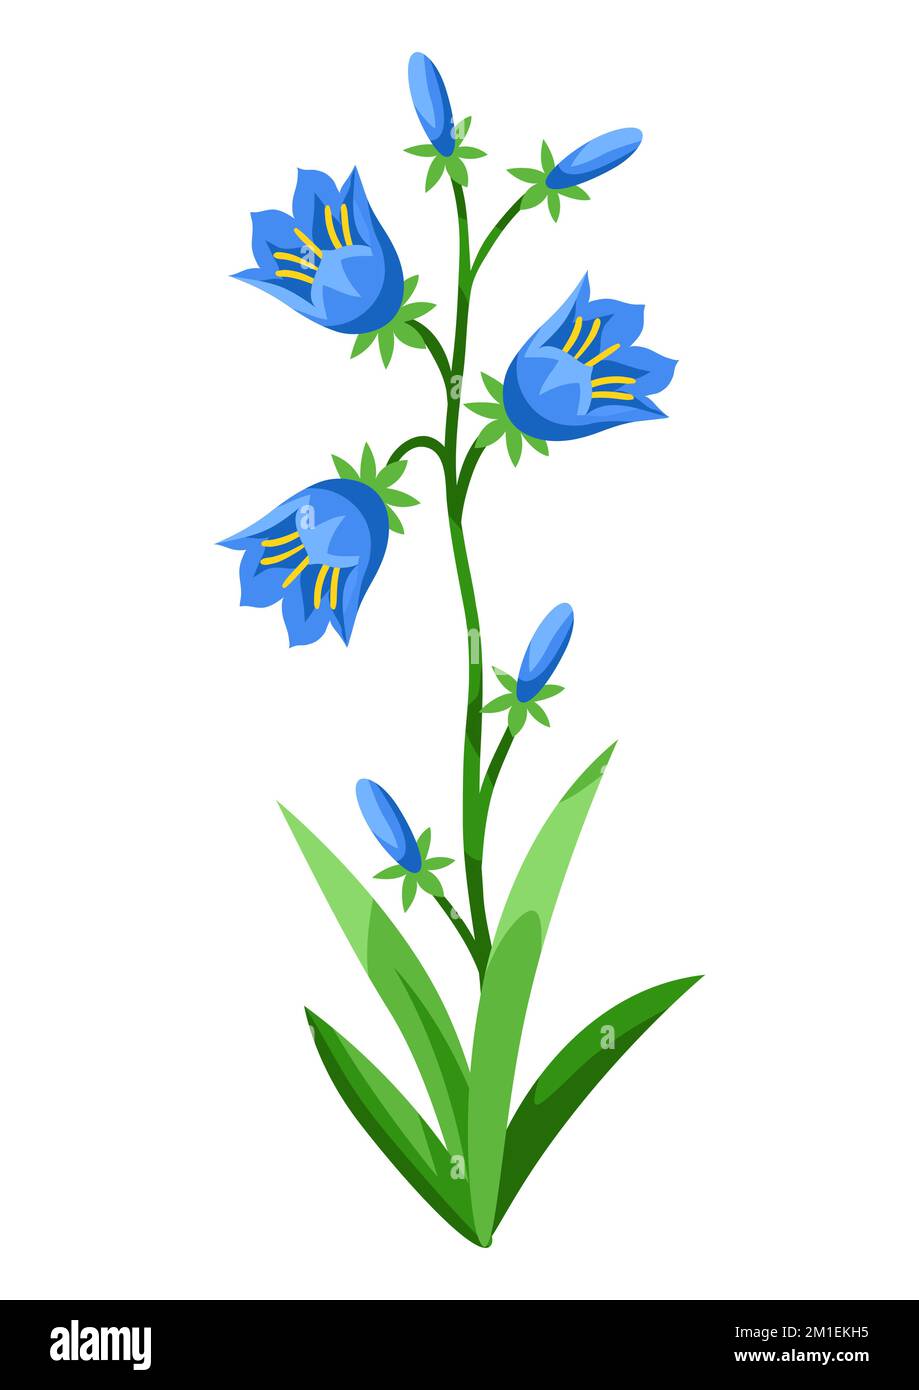 Illustration of bluebell flower. Beautiful decorative spring plant